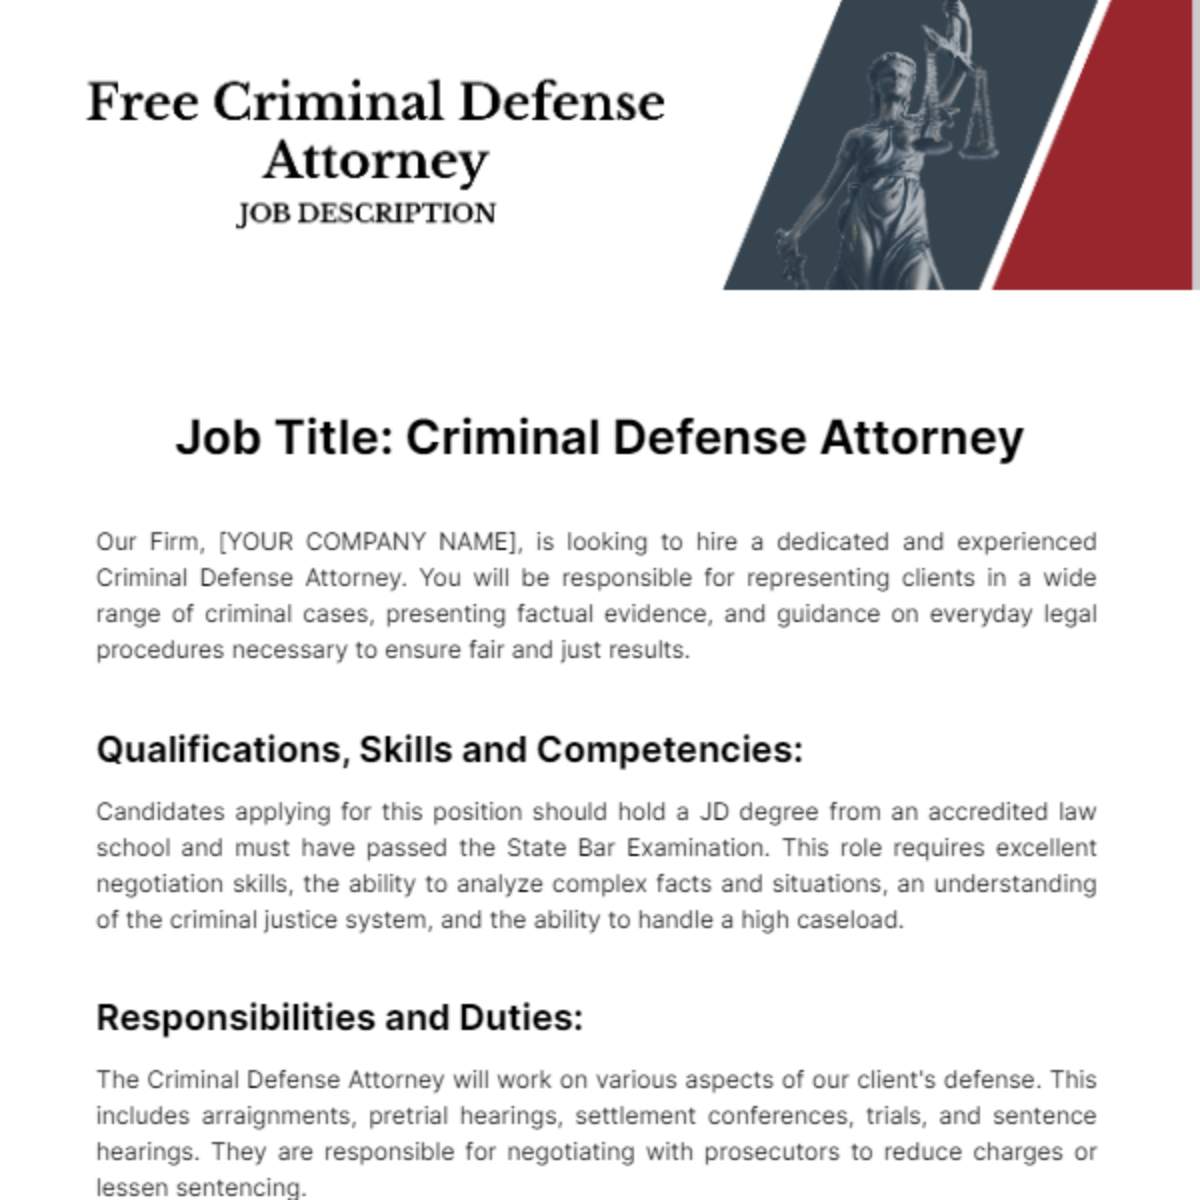 Free Criminal Defense Attorney Job Description Template